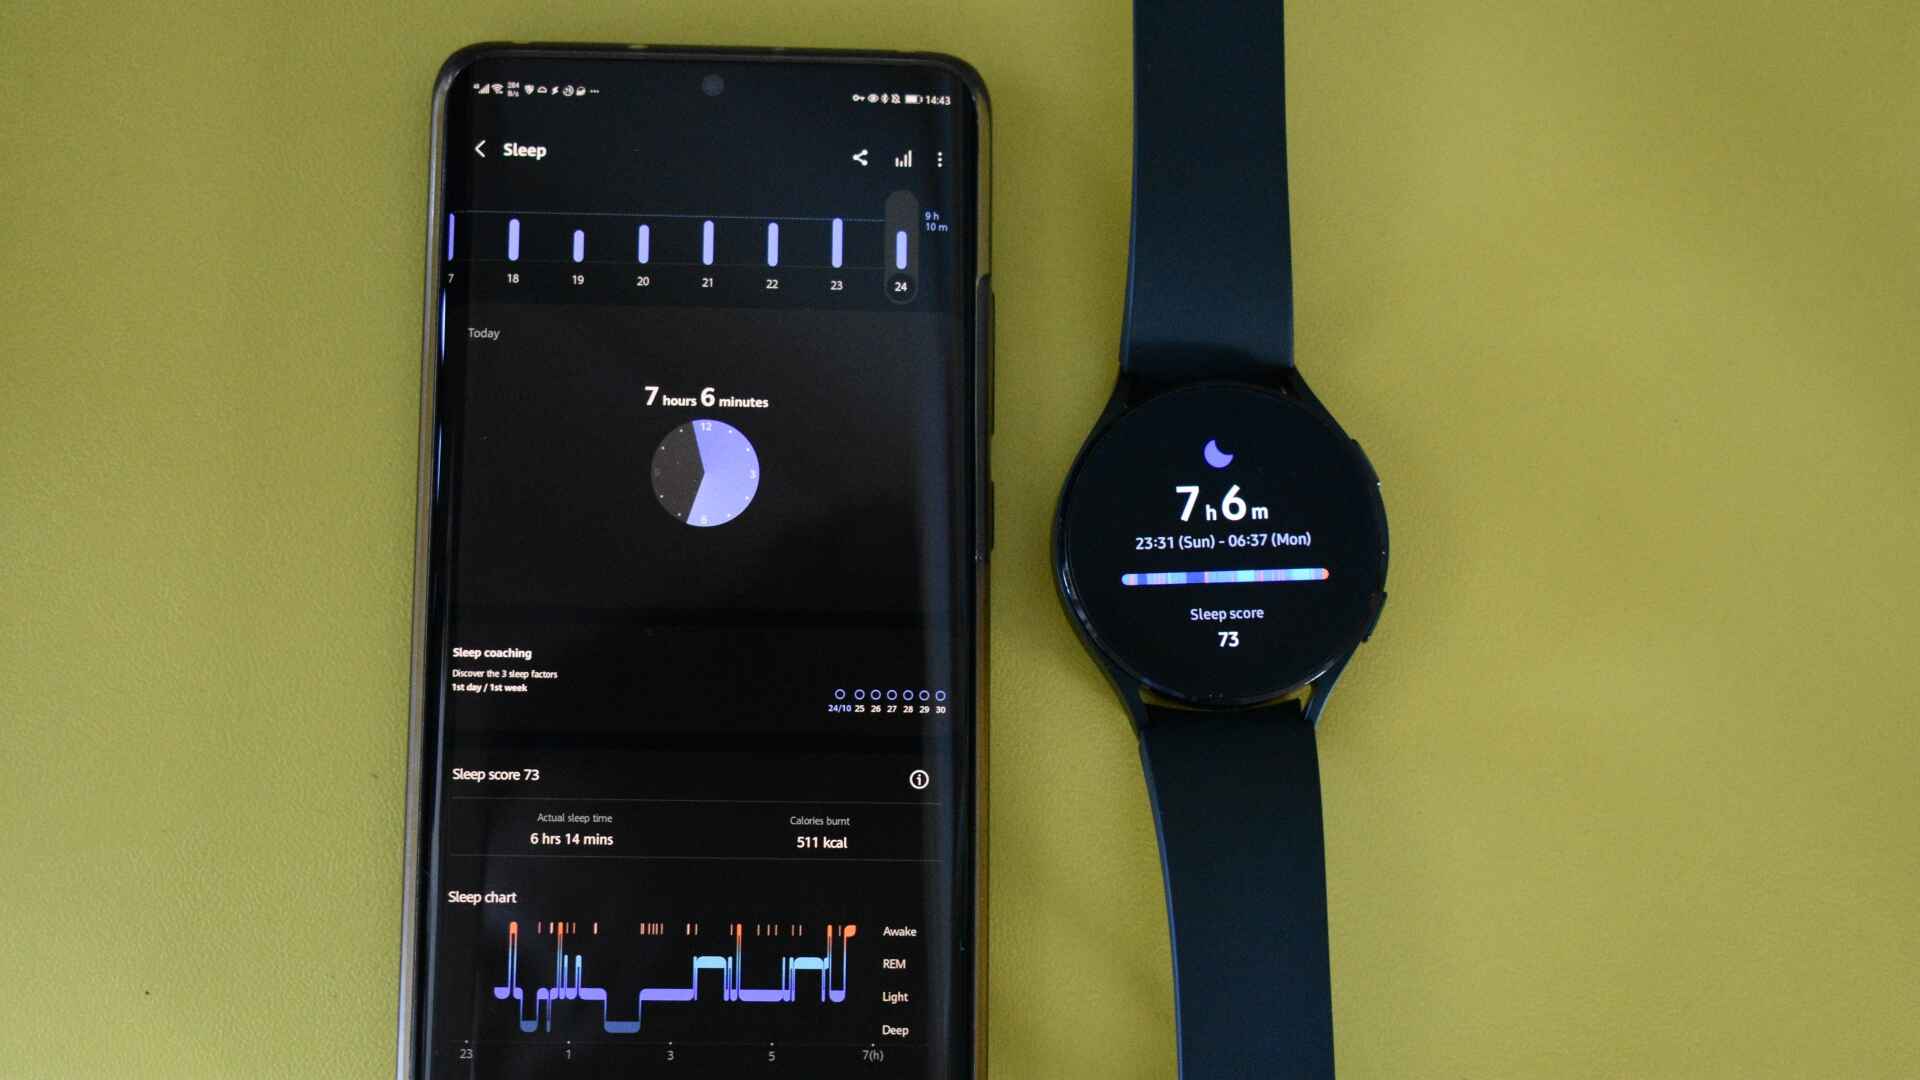 How Accurate Is Sleep Tracker On Galaxy Watch